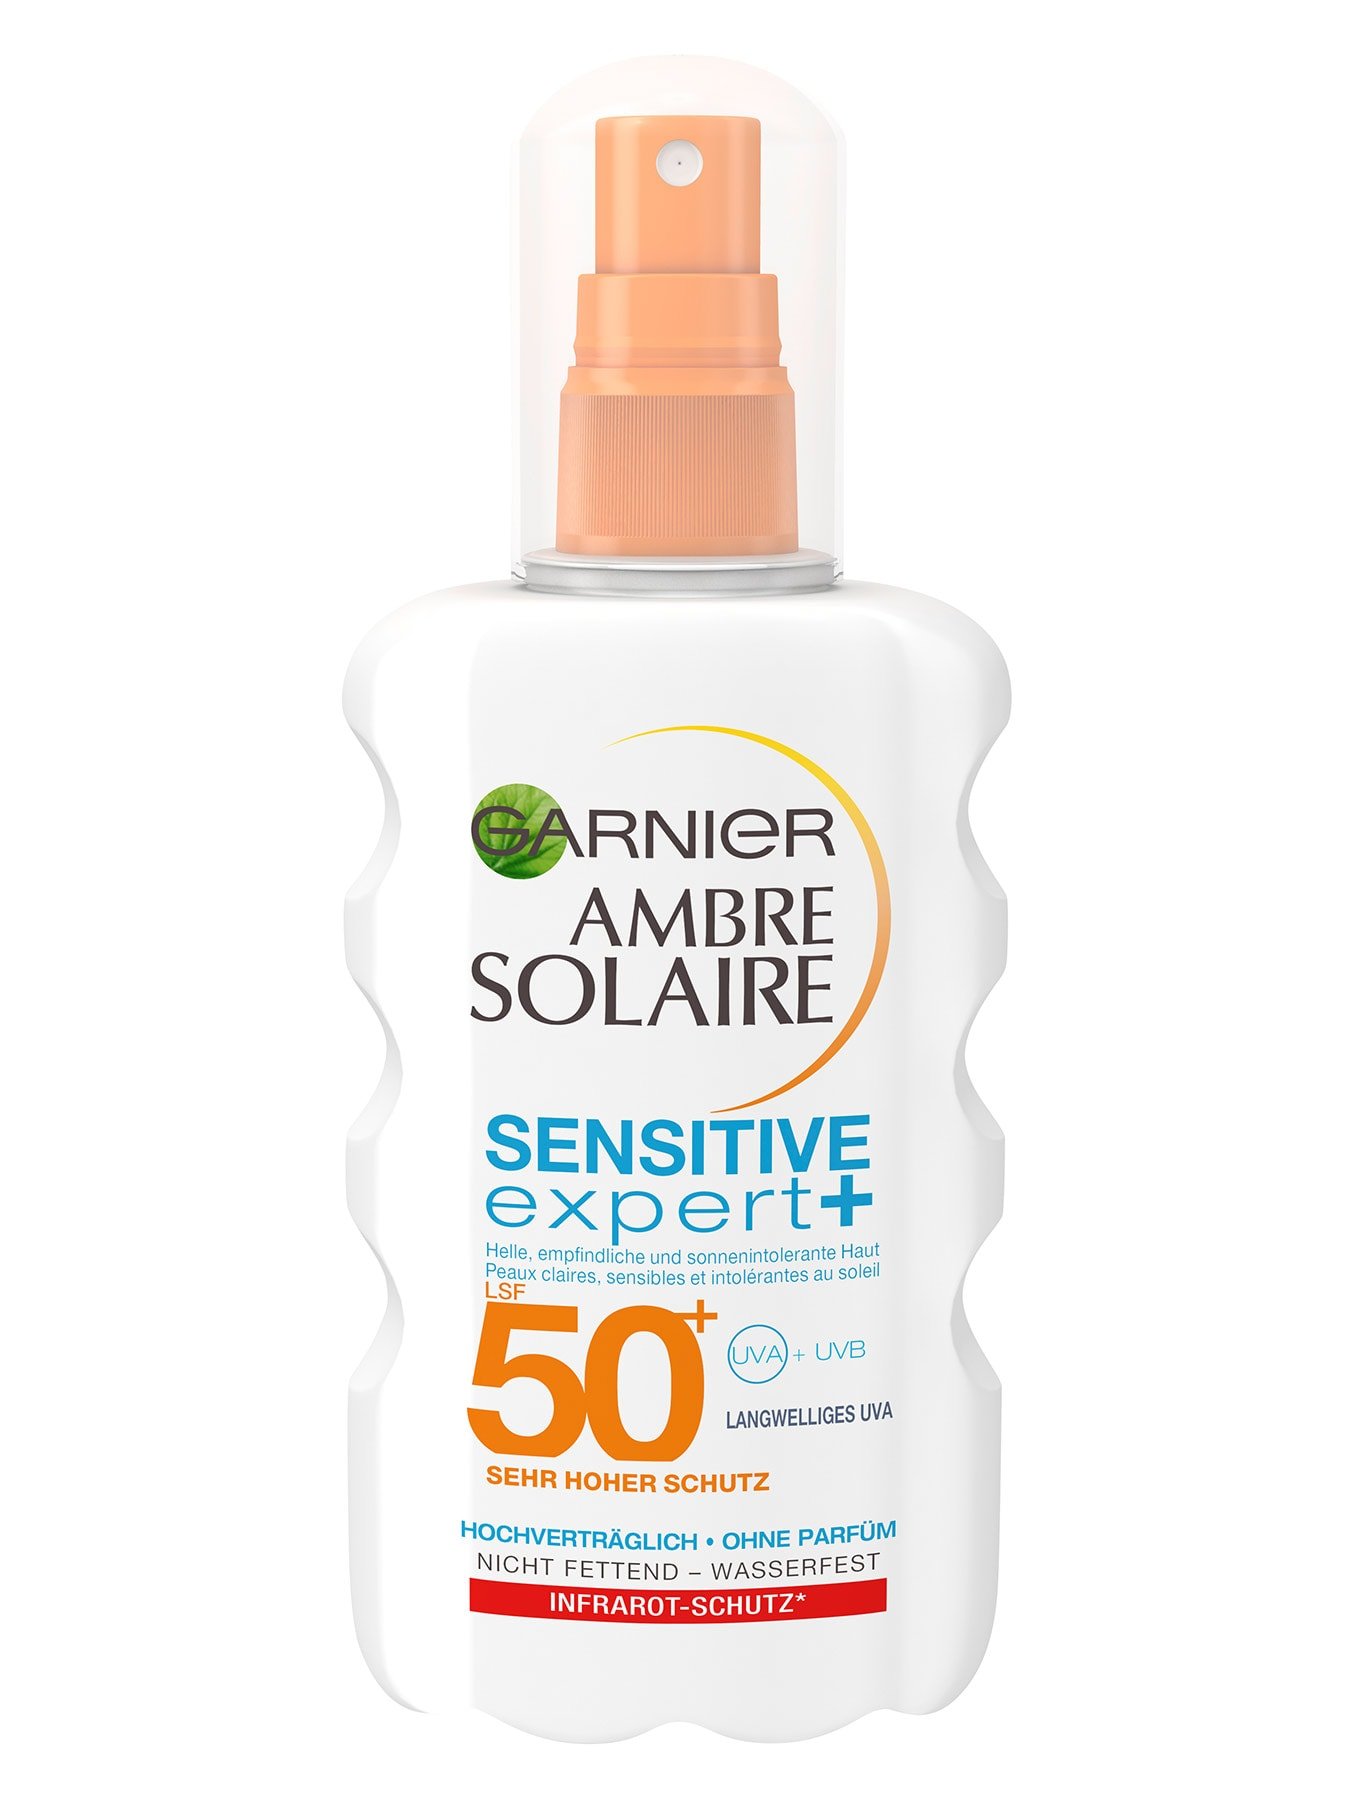 Ambre Solaire Sensitive Expert Spray mit LSF 50+ | Garnier